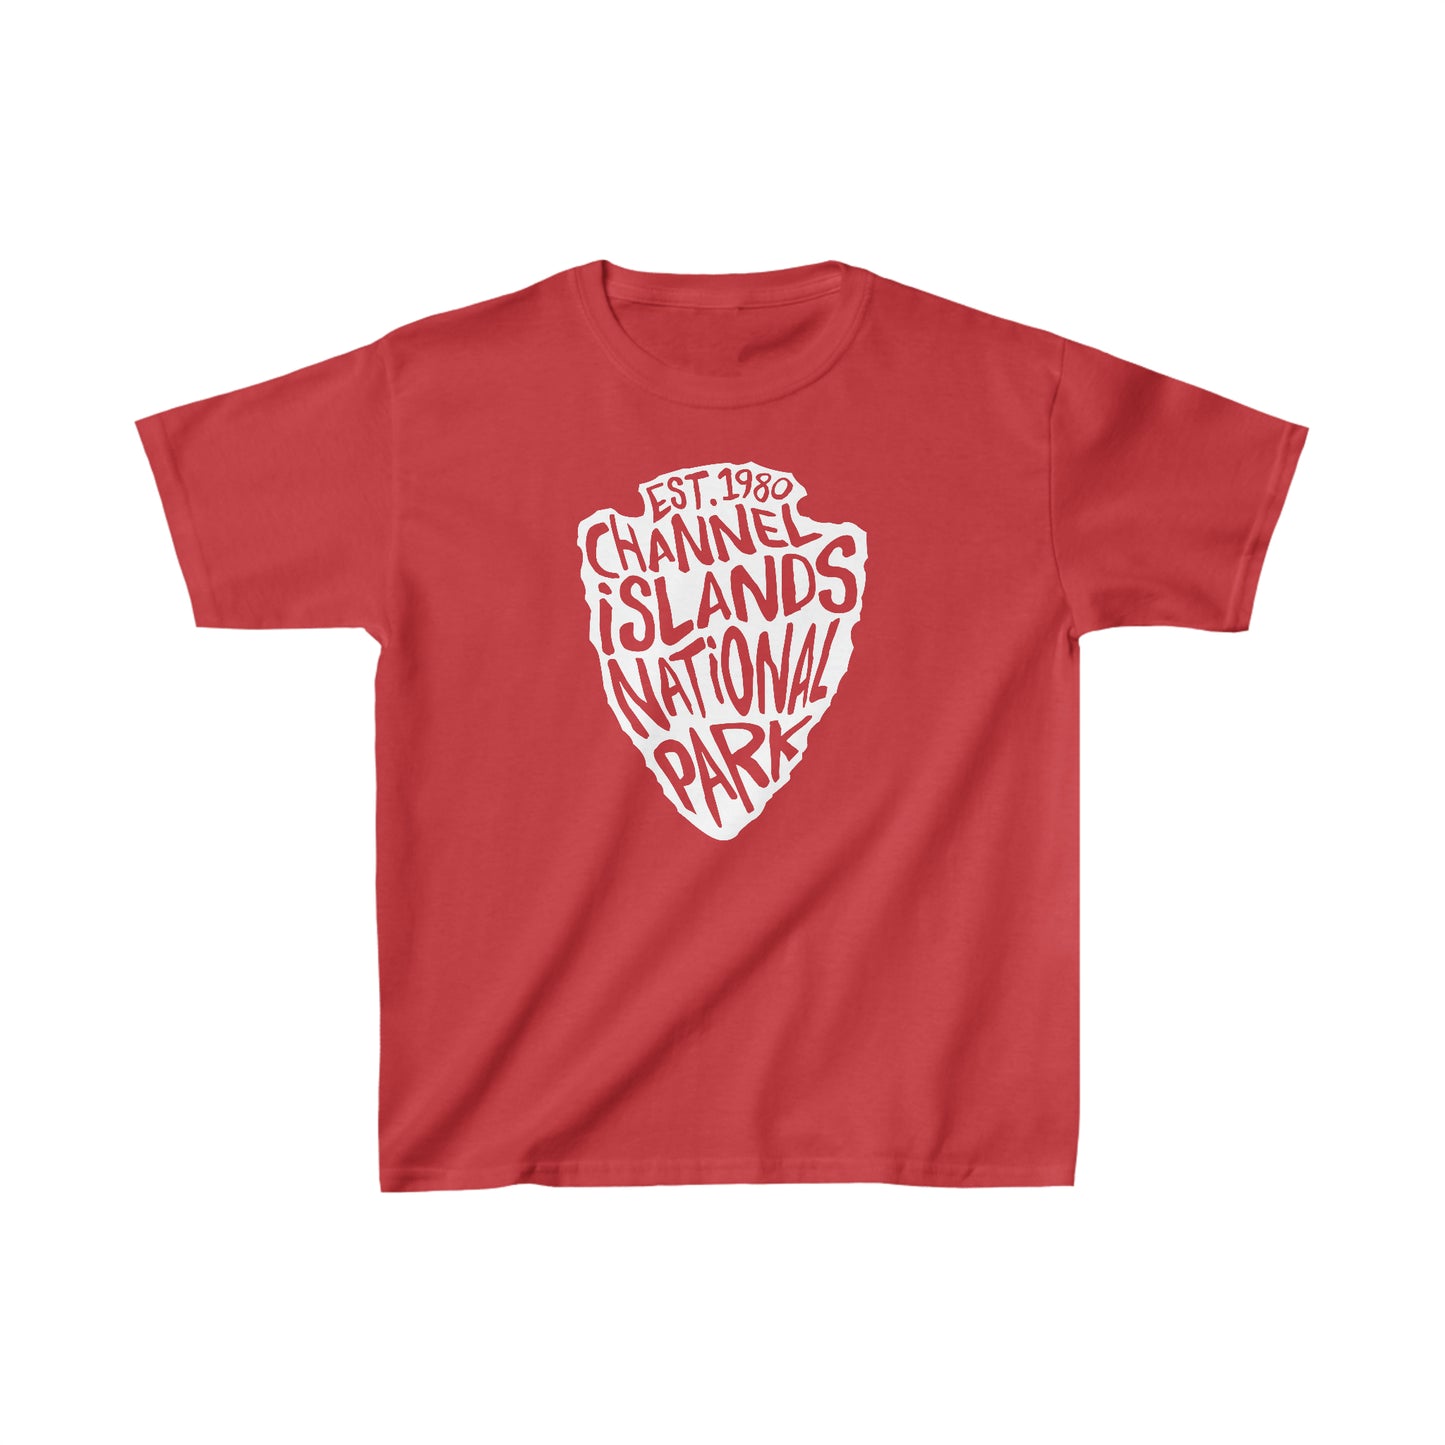 Channel Islands National Park Child T-Shirt - Arrowhead Design